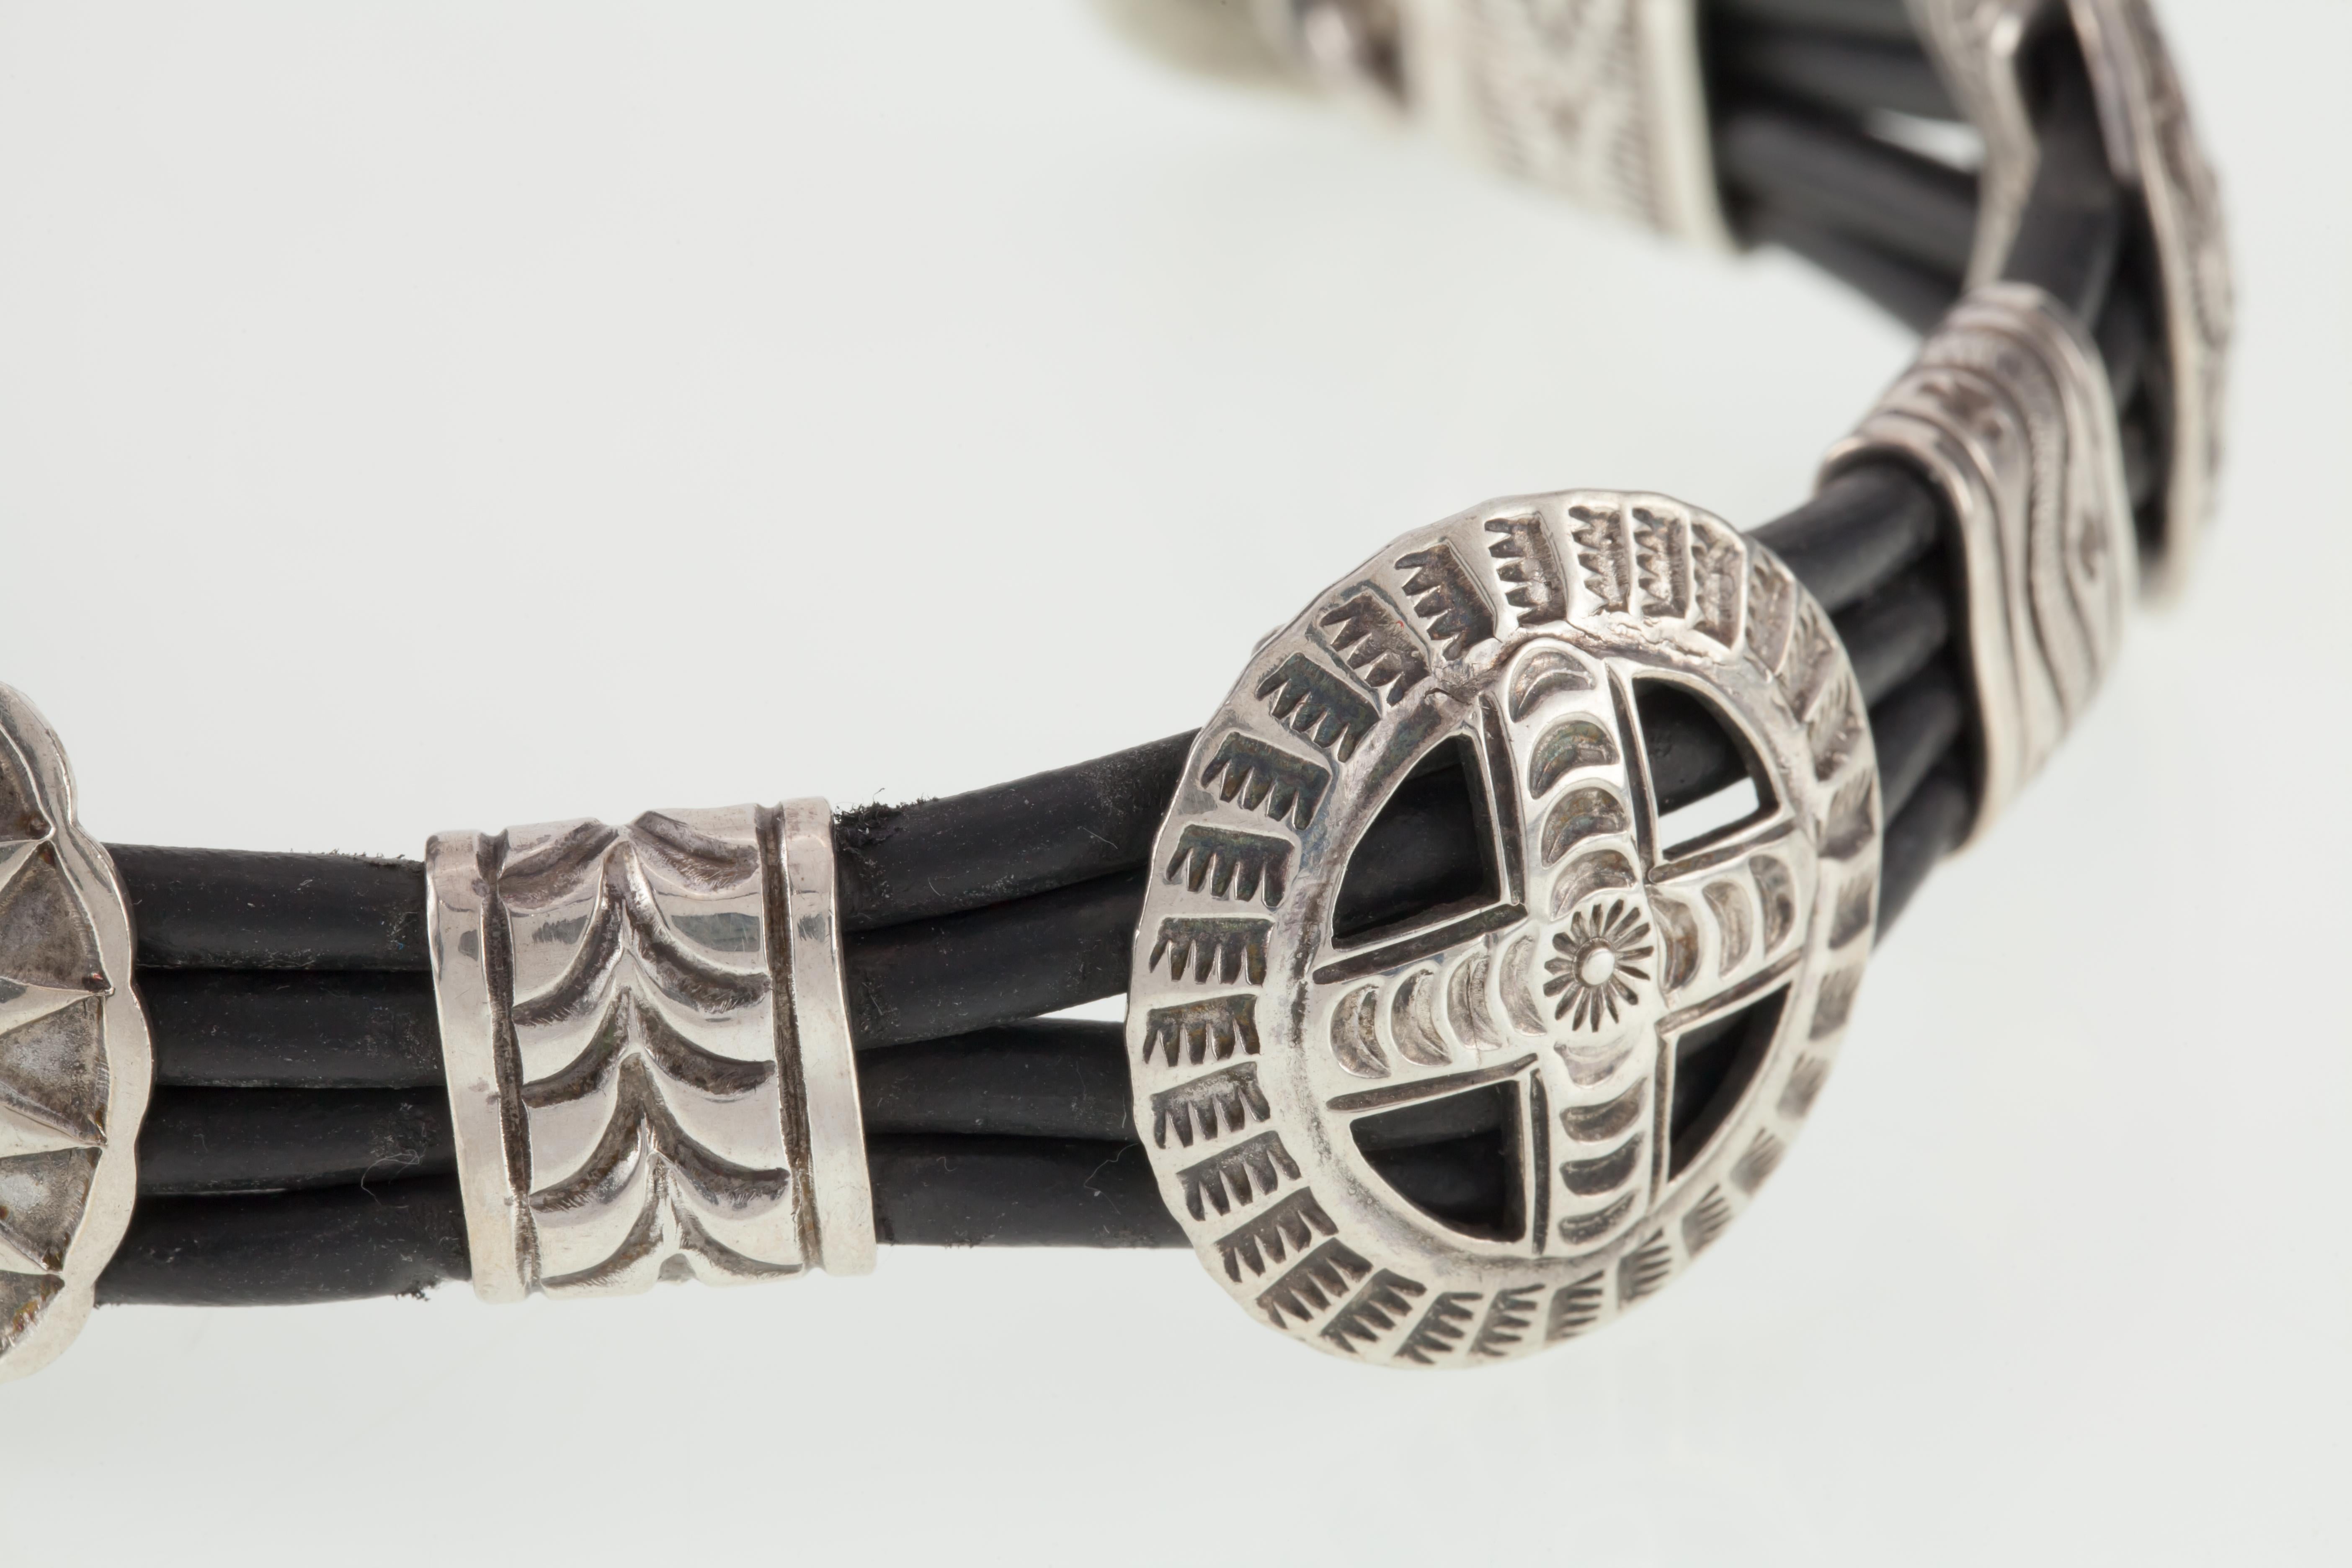 Gorgeous Navajo Sterling & Leather Bracelet
Features a Hand Stamp Design Solar Cross 
Width of Bracelet = 25 mm
Total Length = 7.25